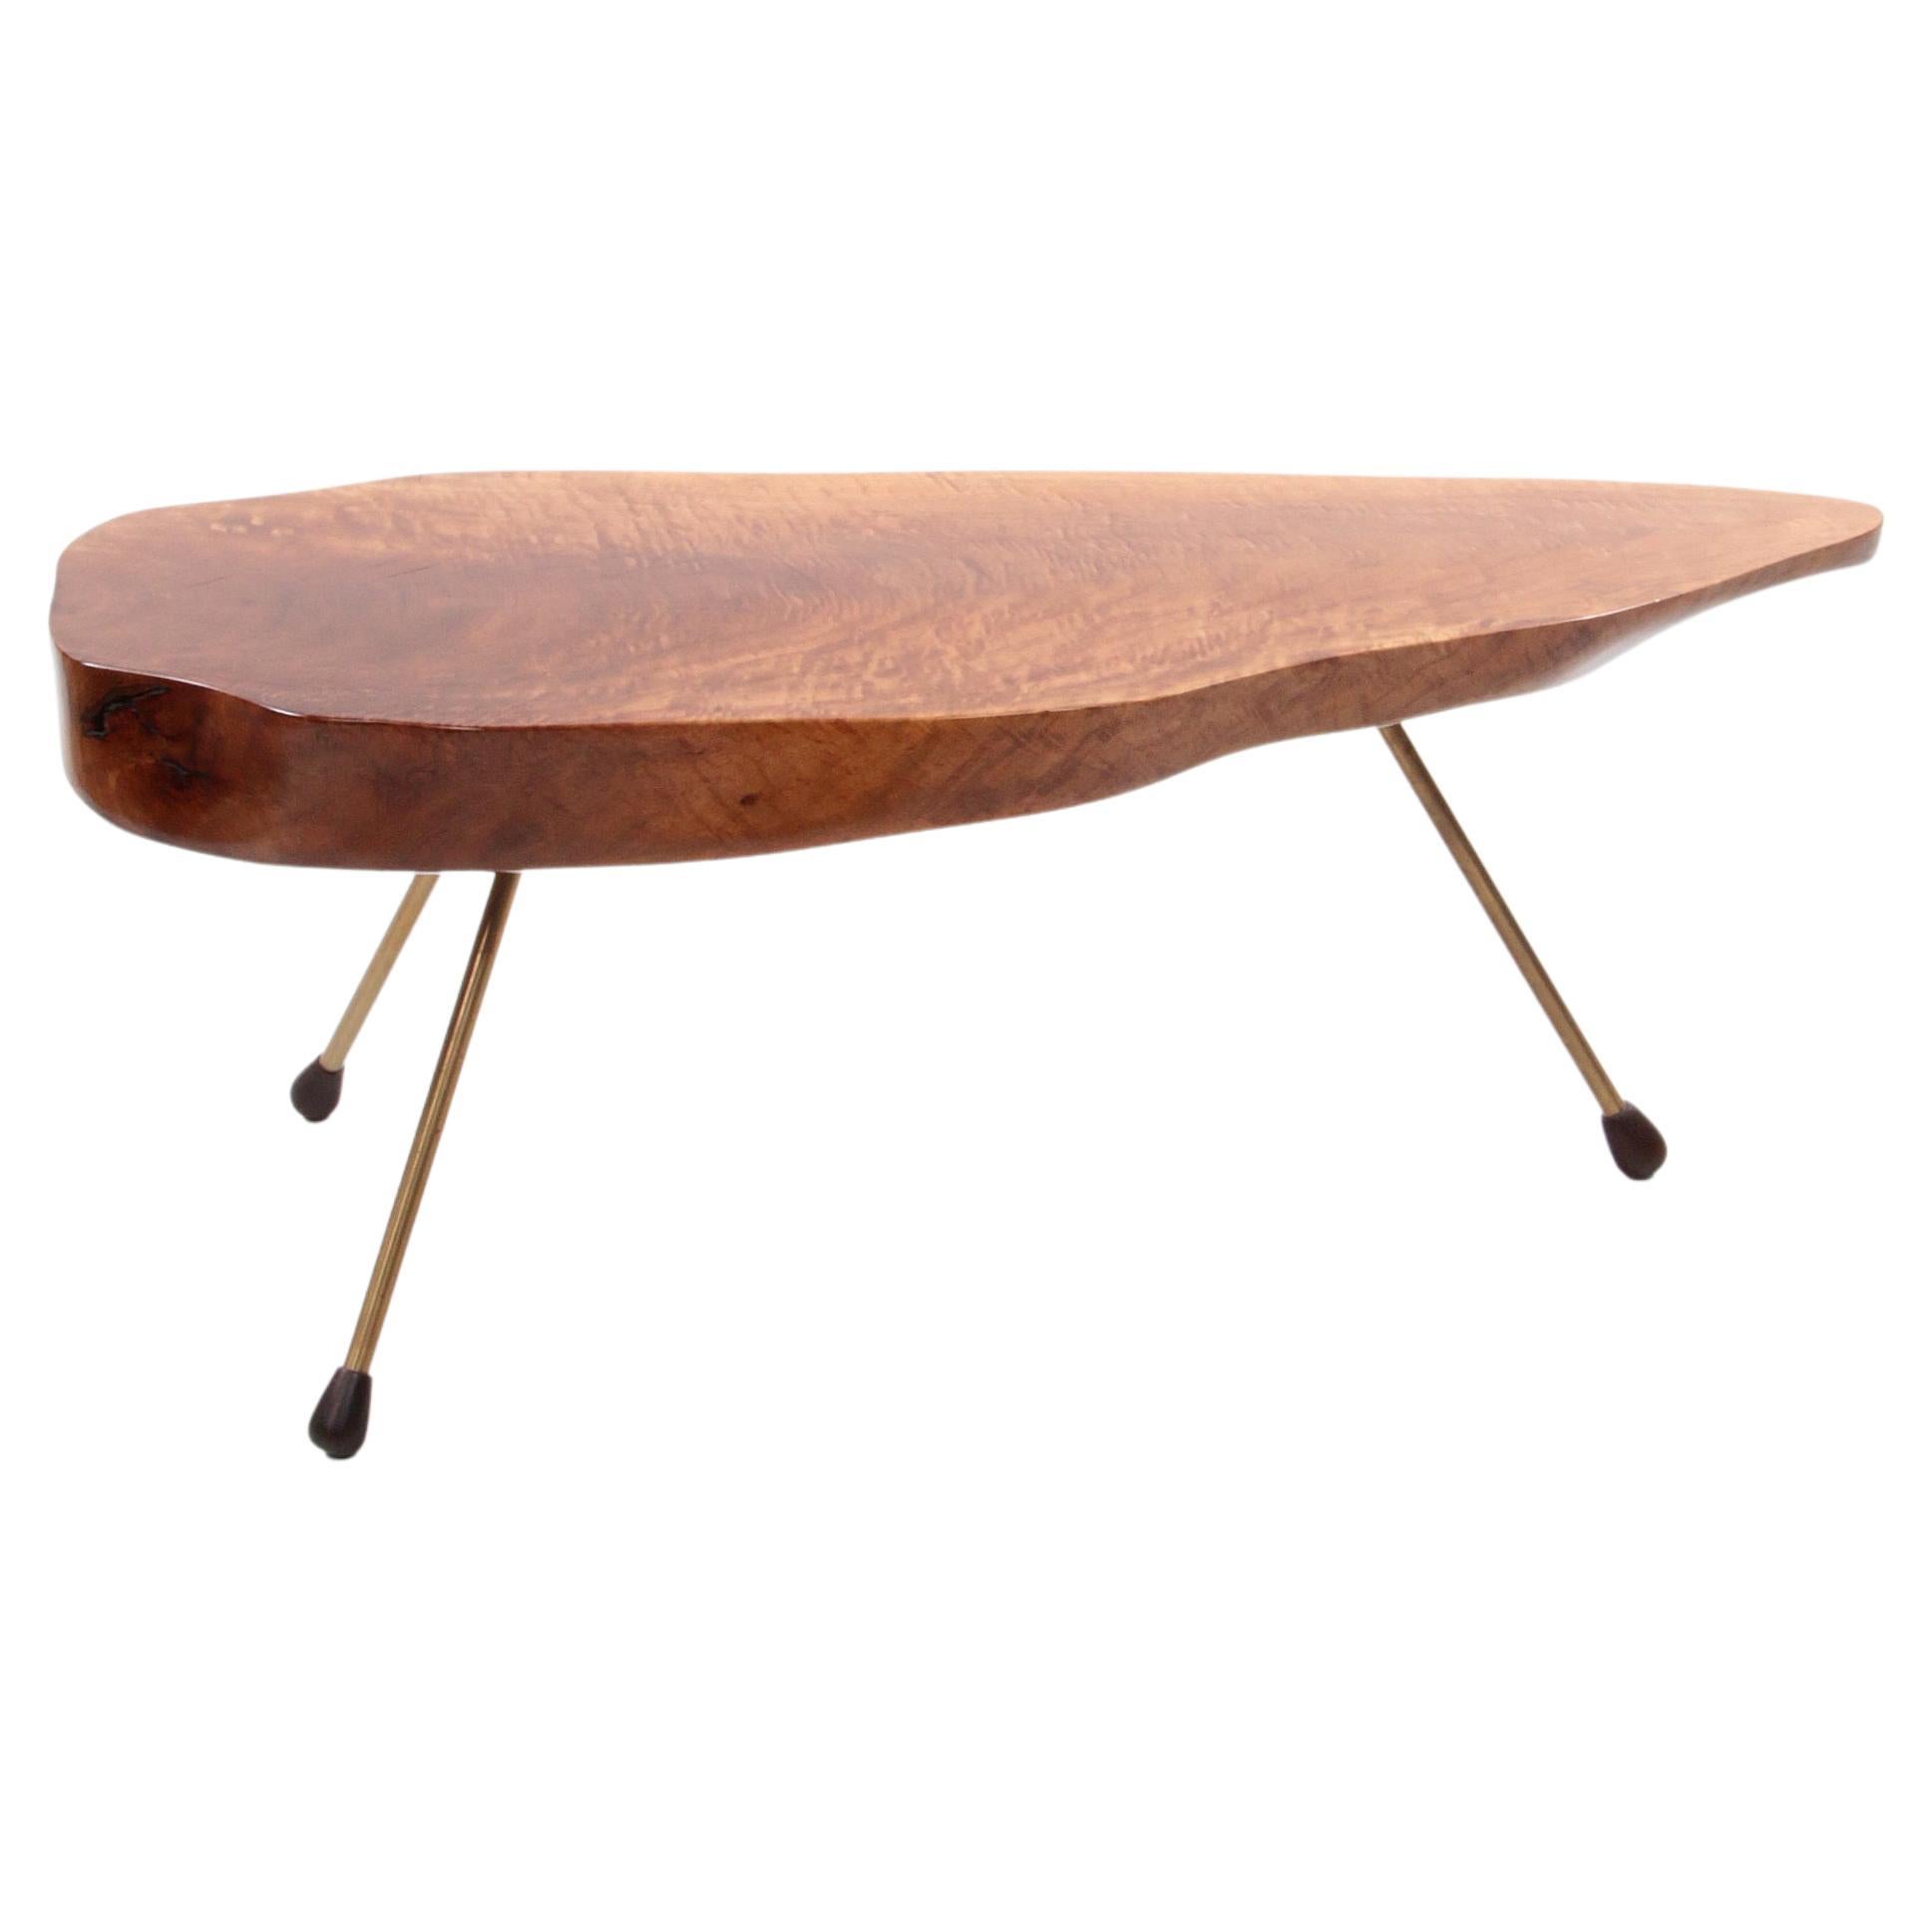 Design Coffee Table Walnut with Copper Legs, 1950s Austria